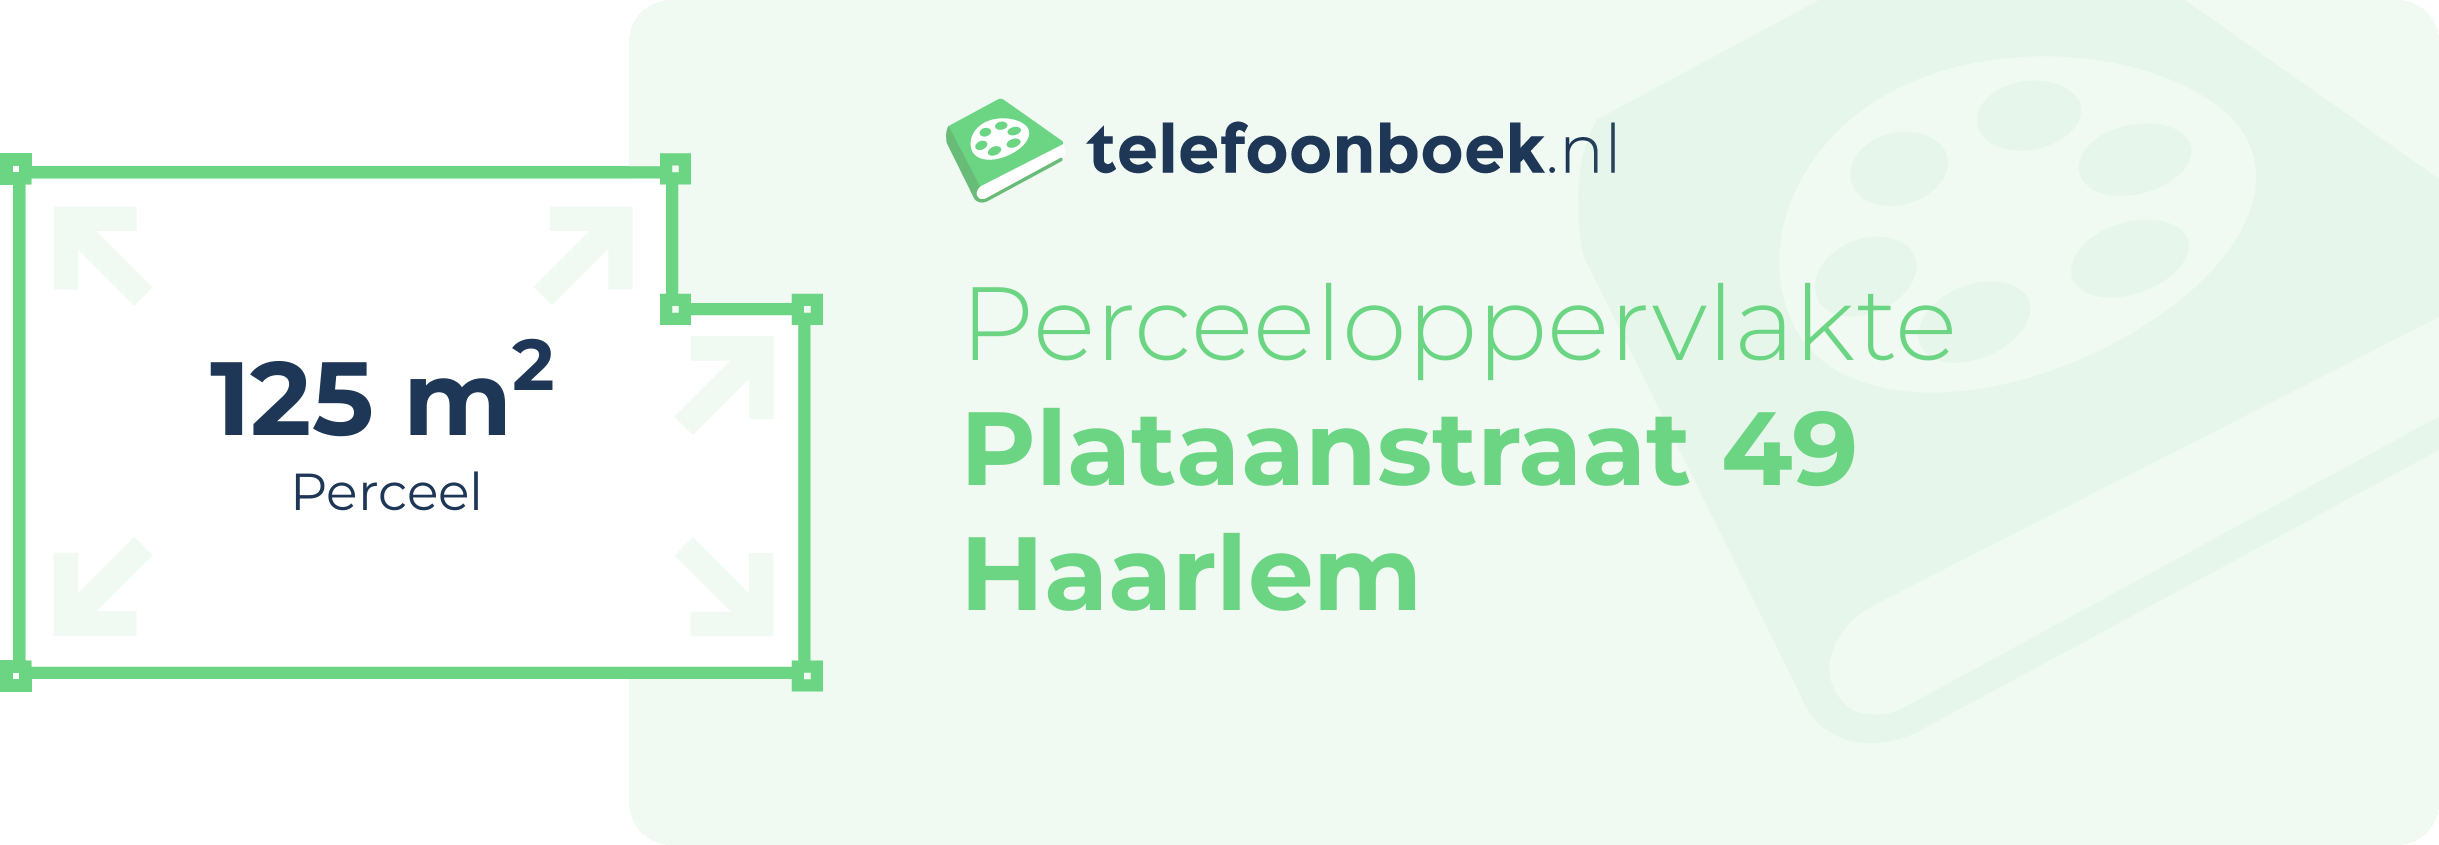 Perceeloppervlakte Plataanstraat 49 Haarlem